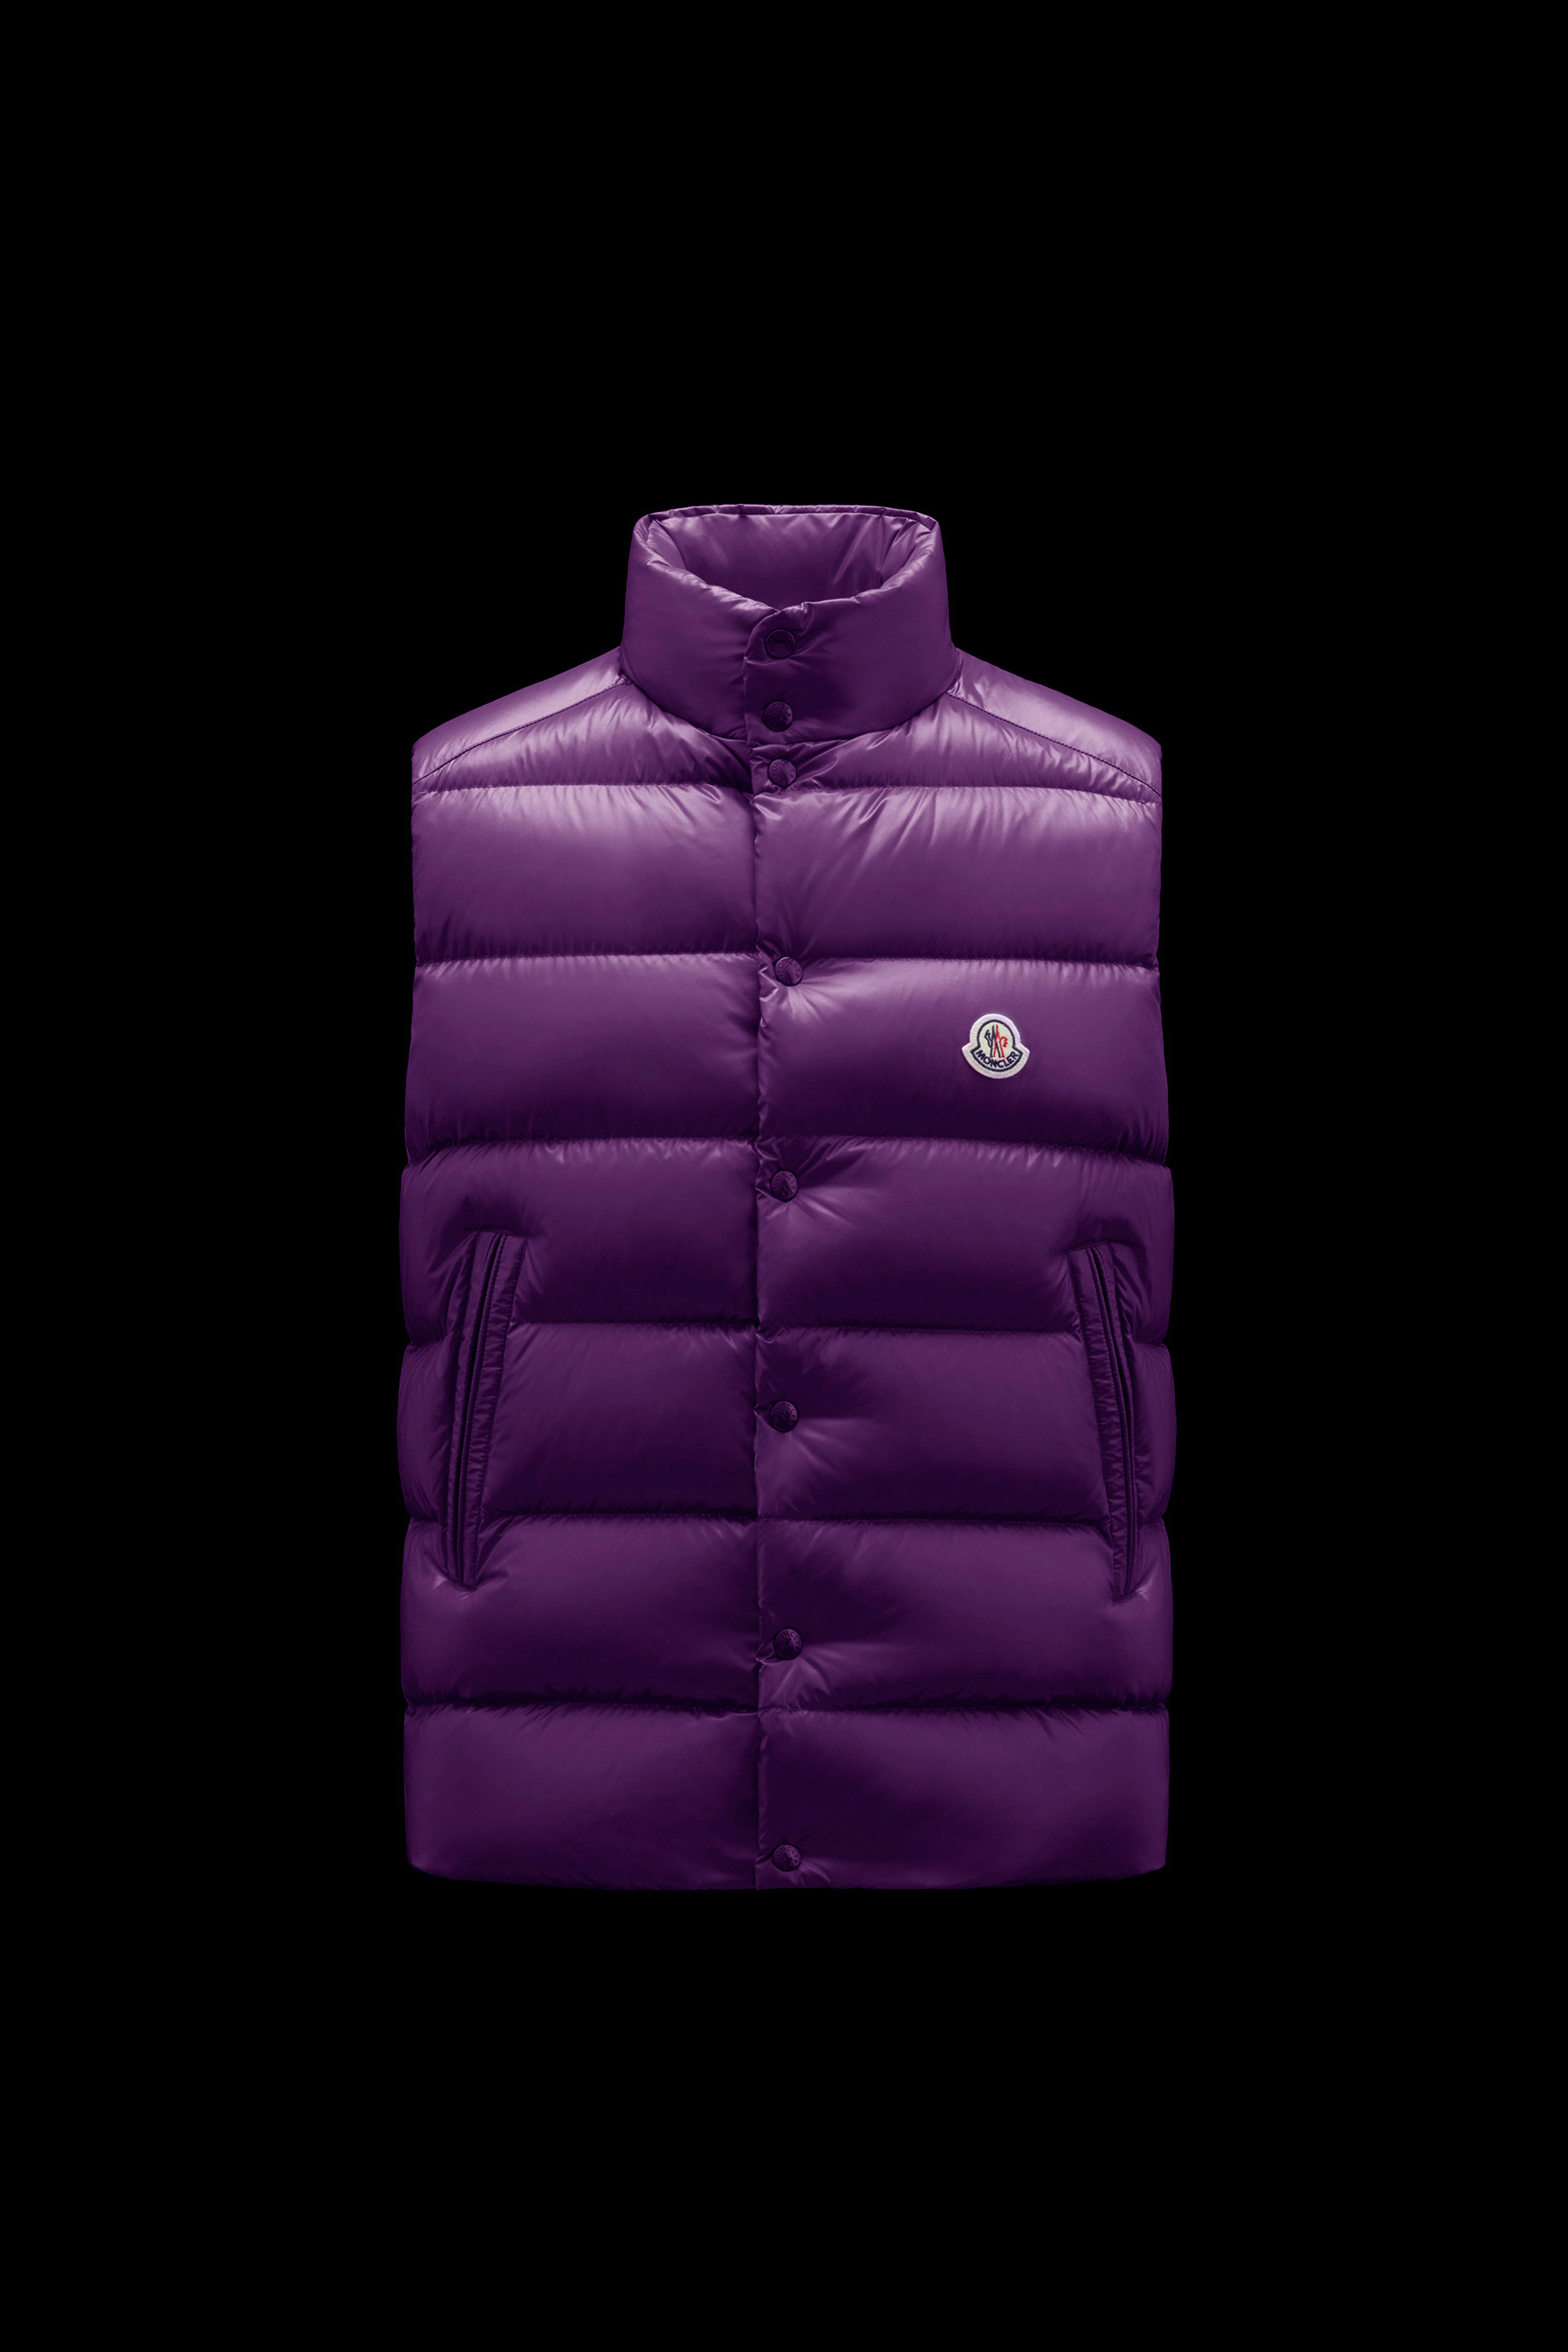 Mens purple puffer vest start trading binary options reviews